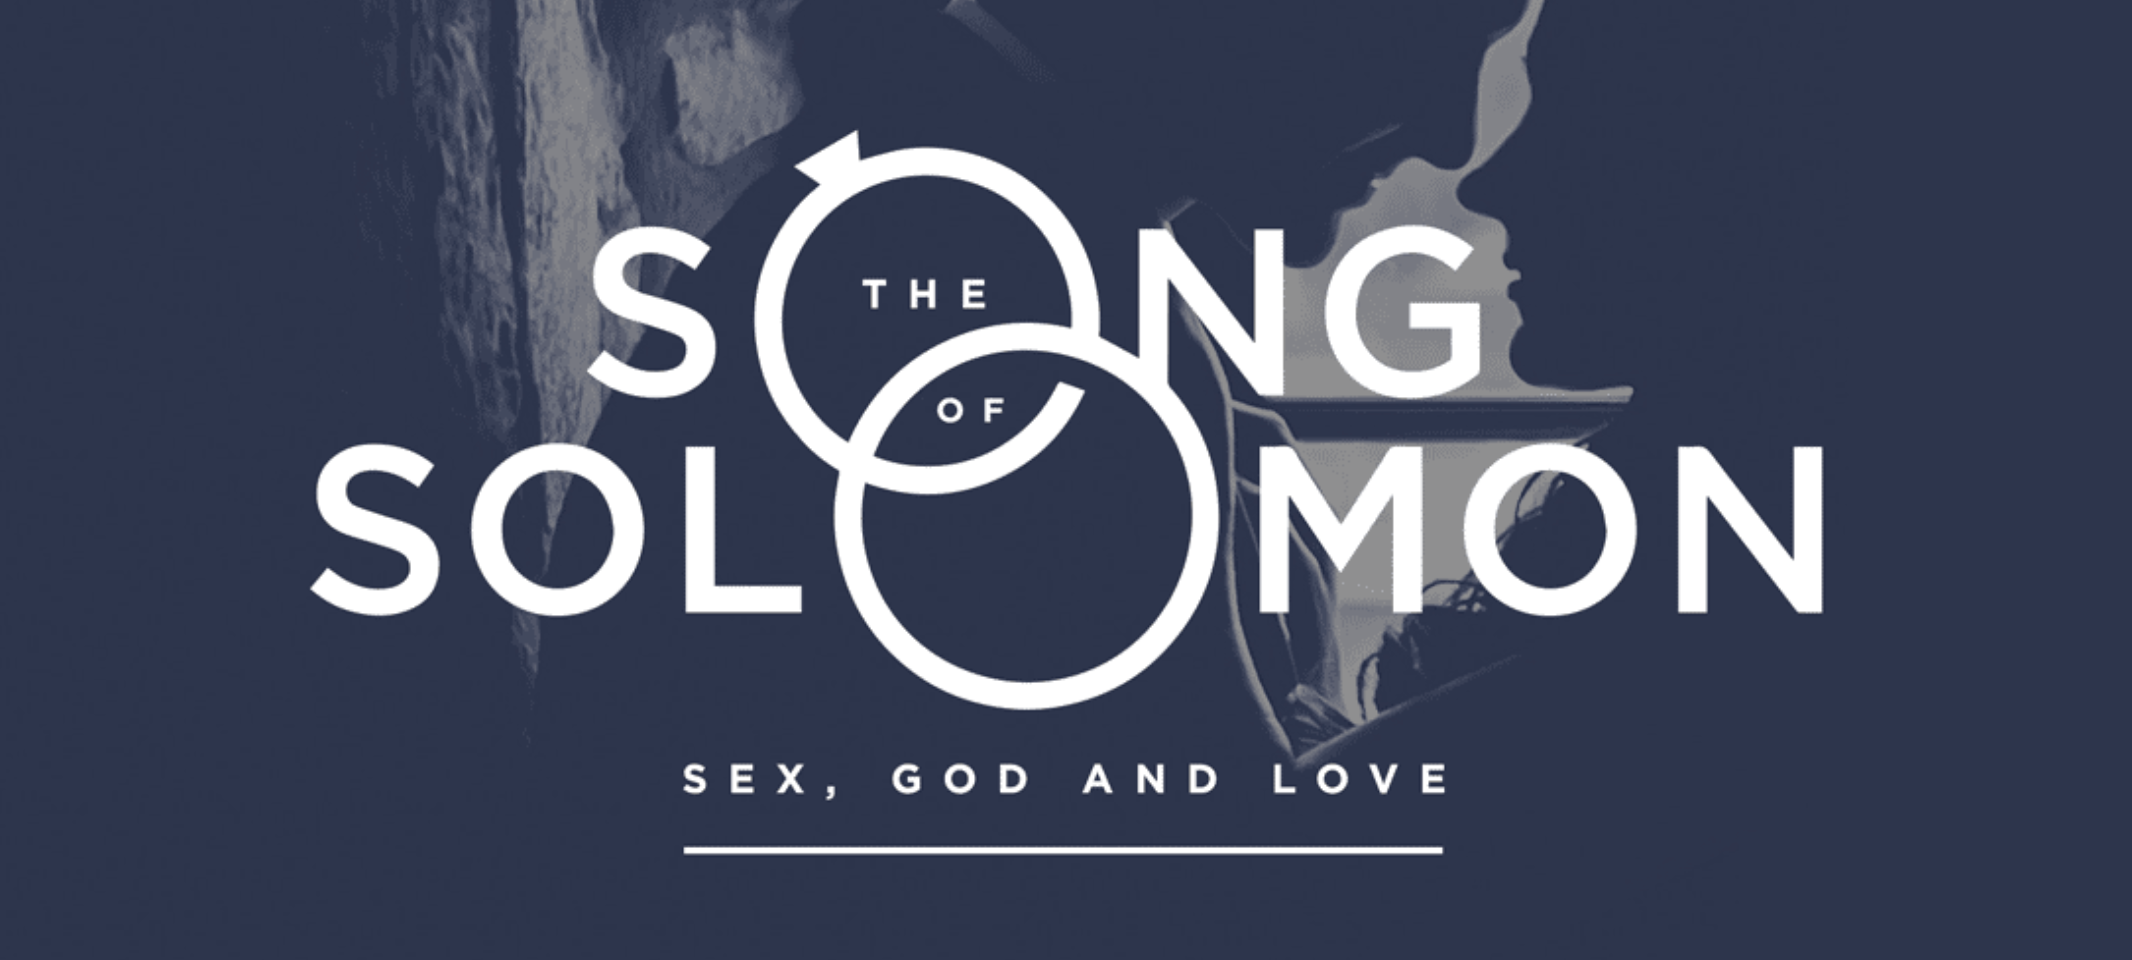 Song of Solomon Part 1